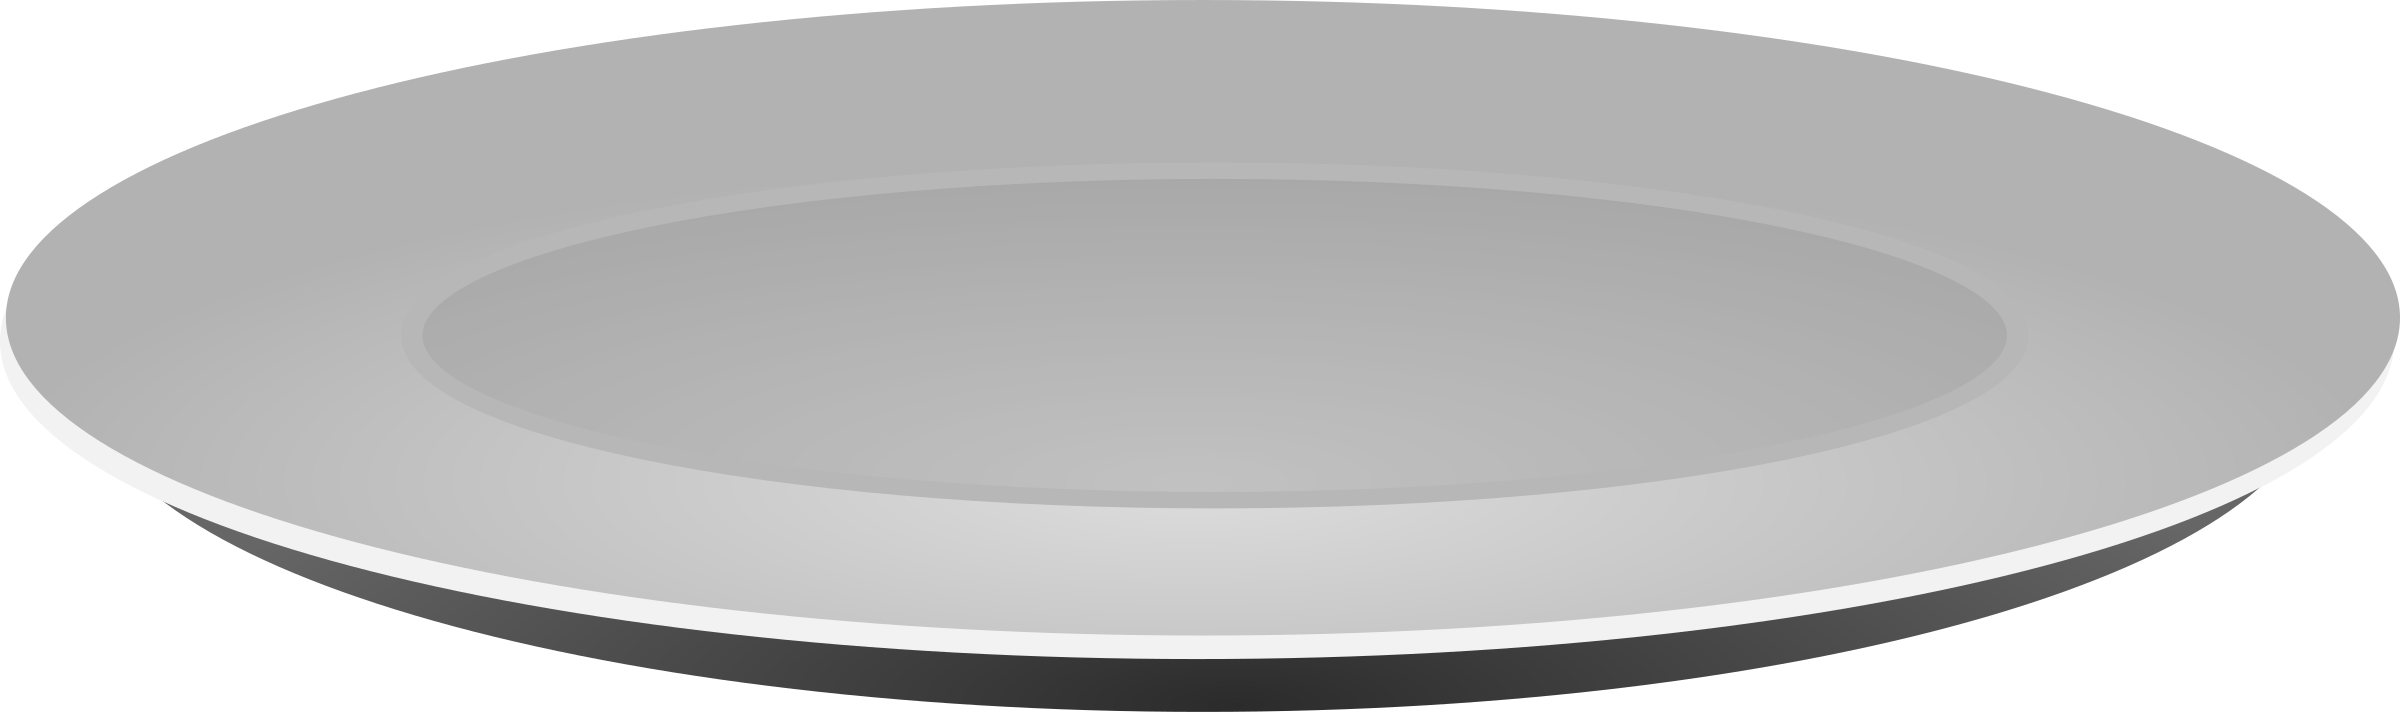 Plate clipart clipart transparent background, Plate